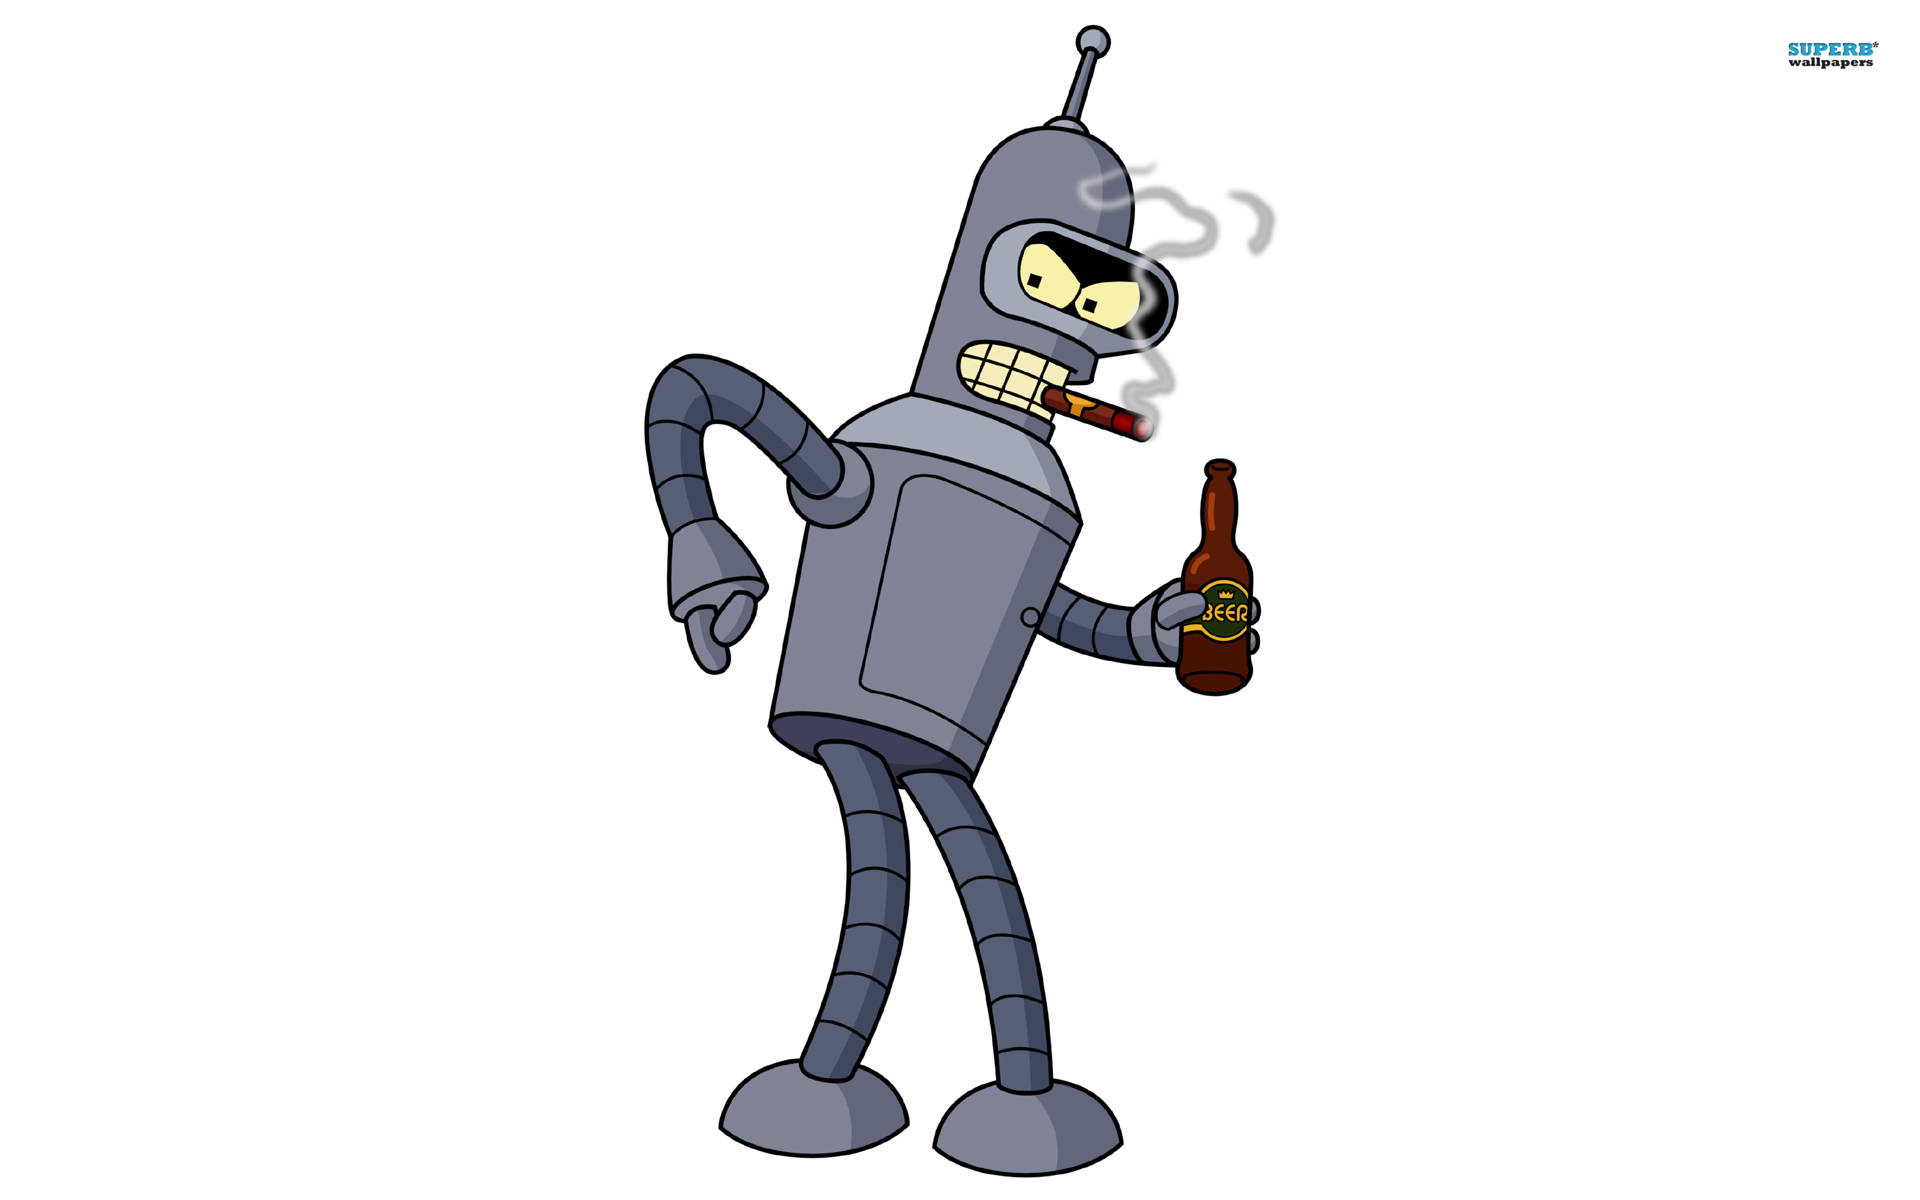 Futurama Bender With Beer Bottle Background